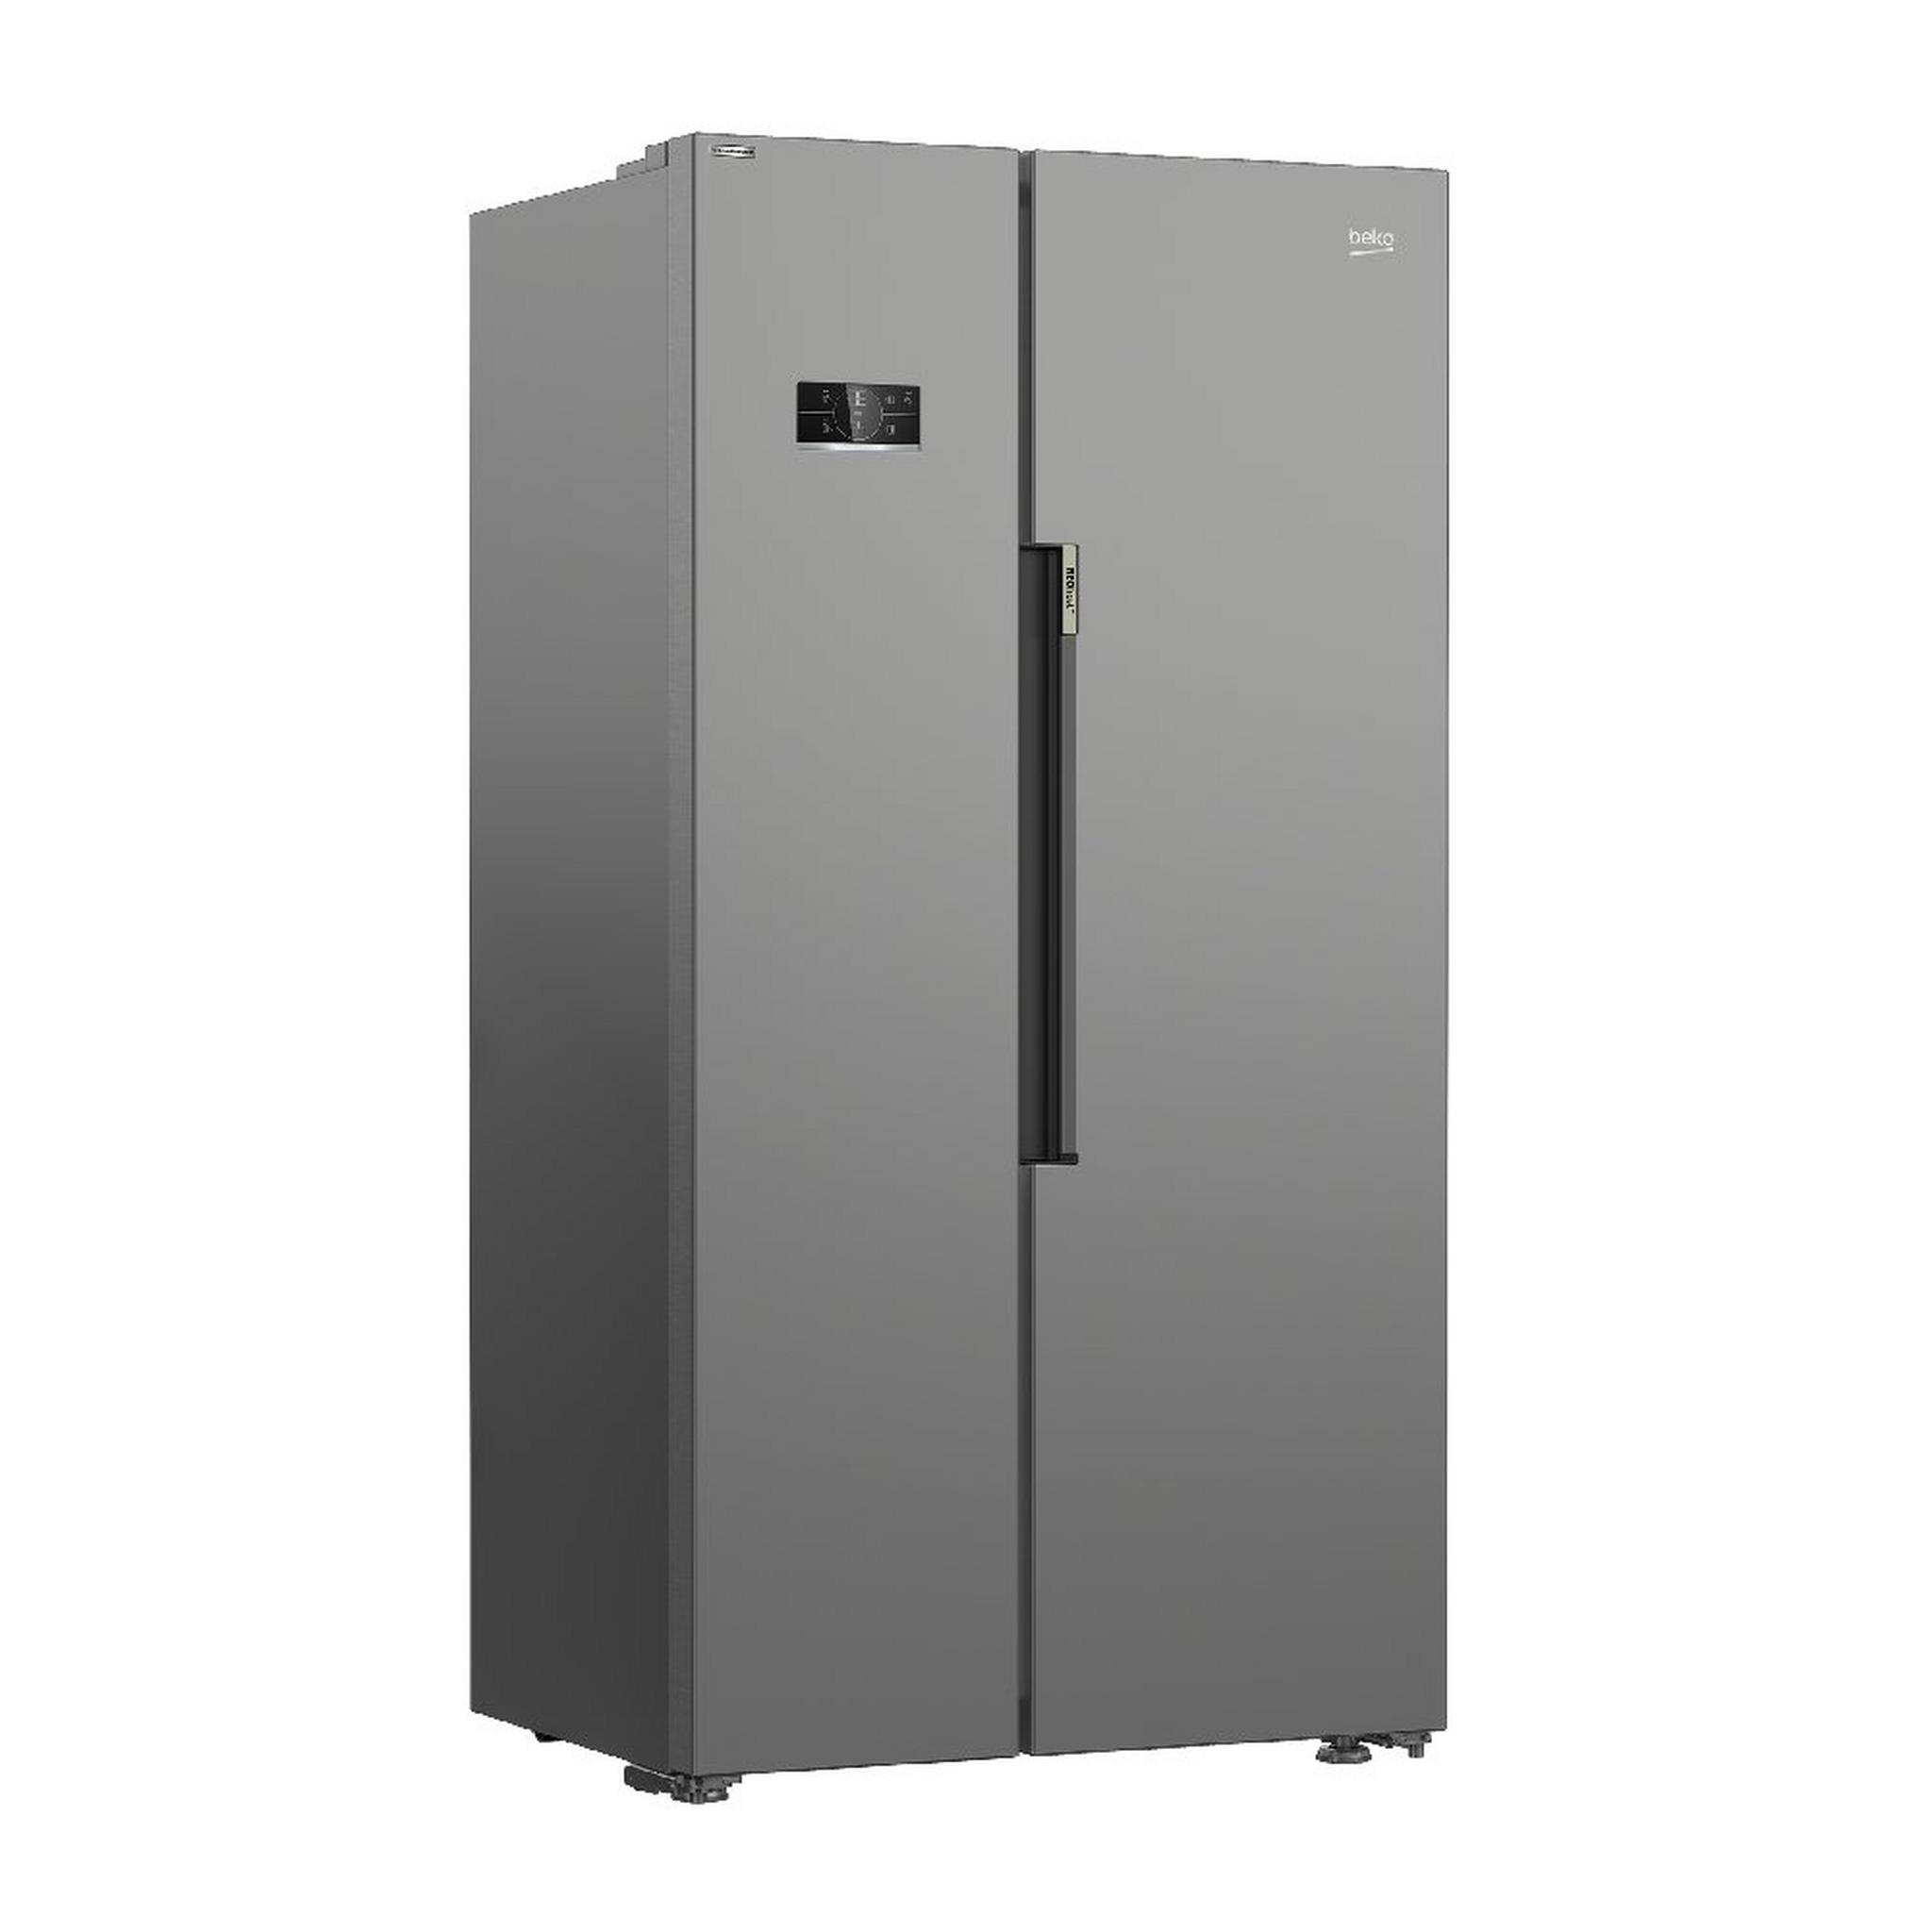 BEKO Side by Side Refrigerator, 22.6CFT, 640 Liters, GNE741S – Silver